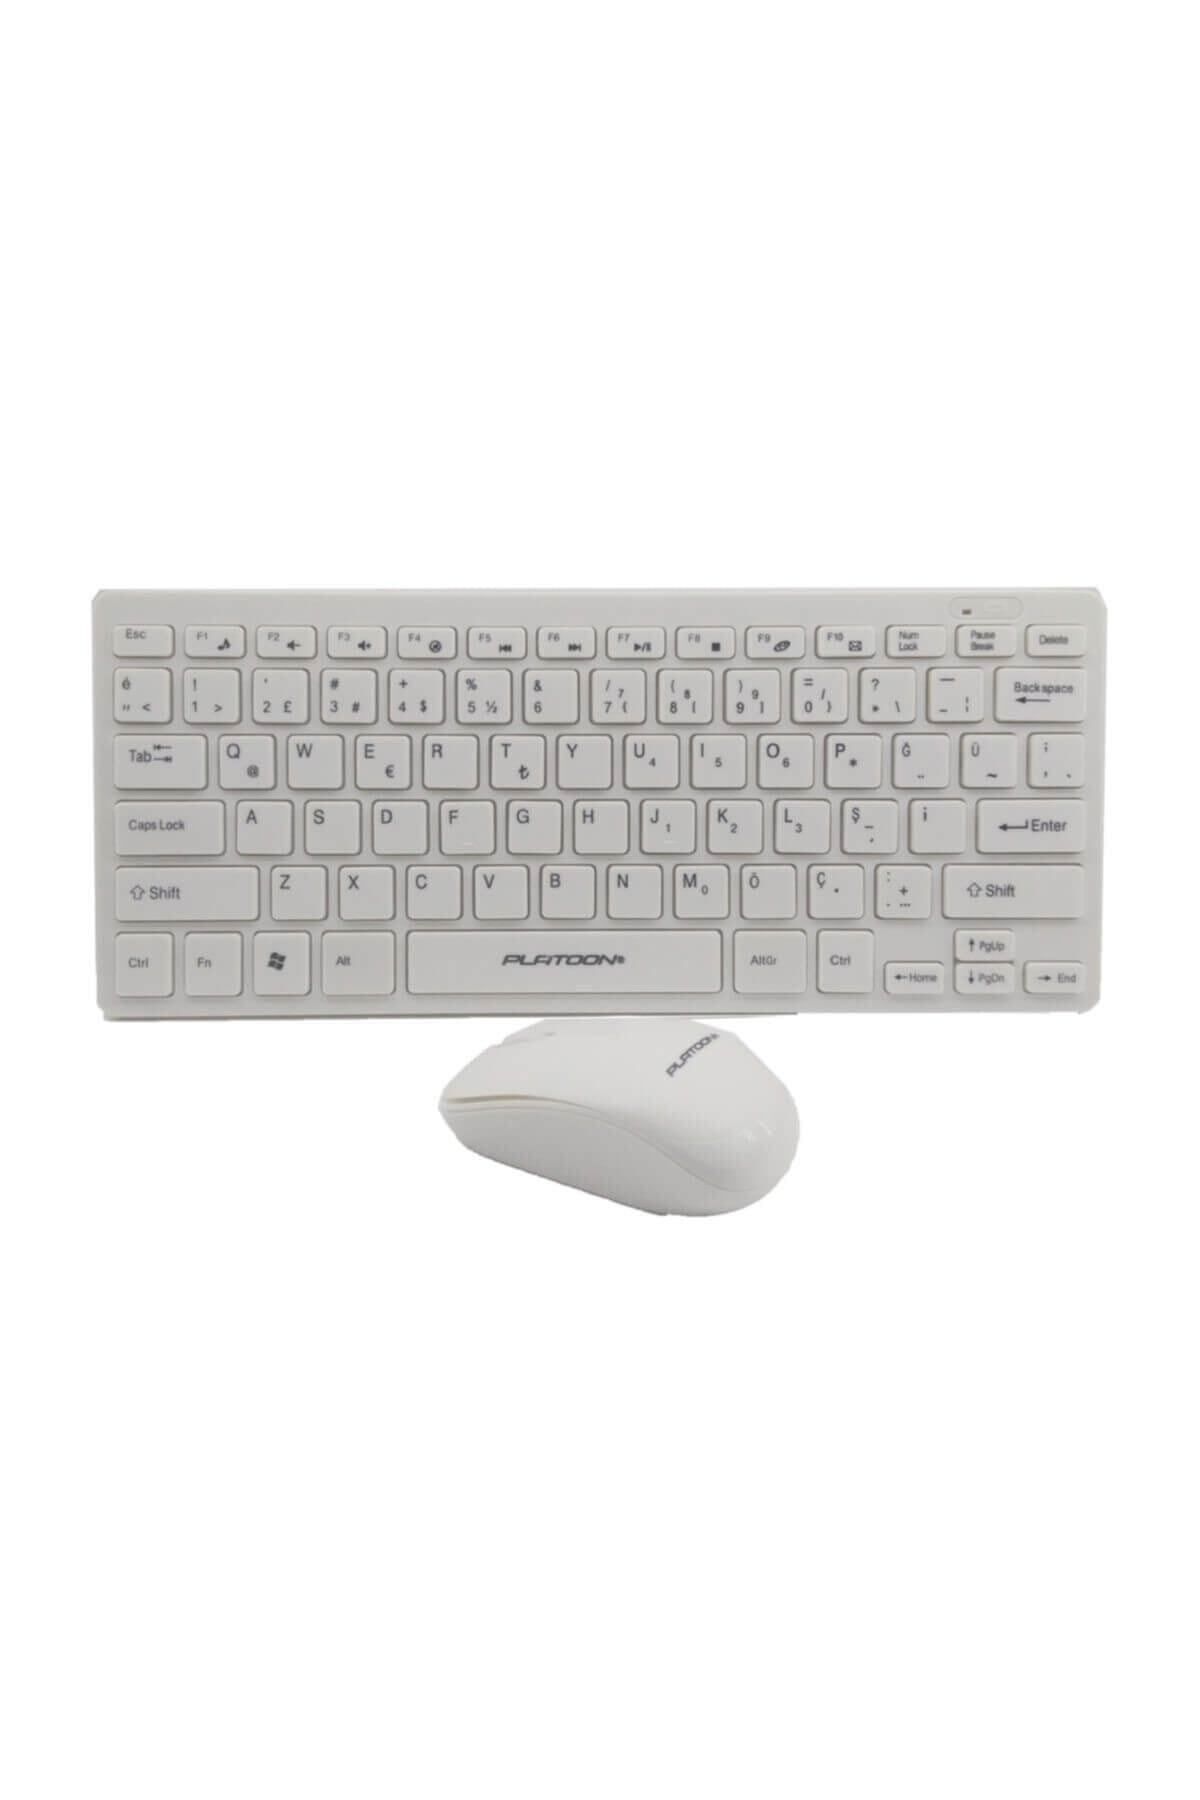 Platoon Pl-395 Beyaz Renk Kaliteli Mini Kablosuz Klavye Mouse Set